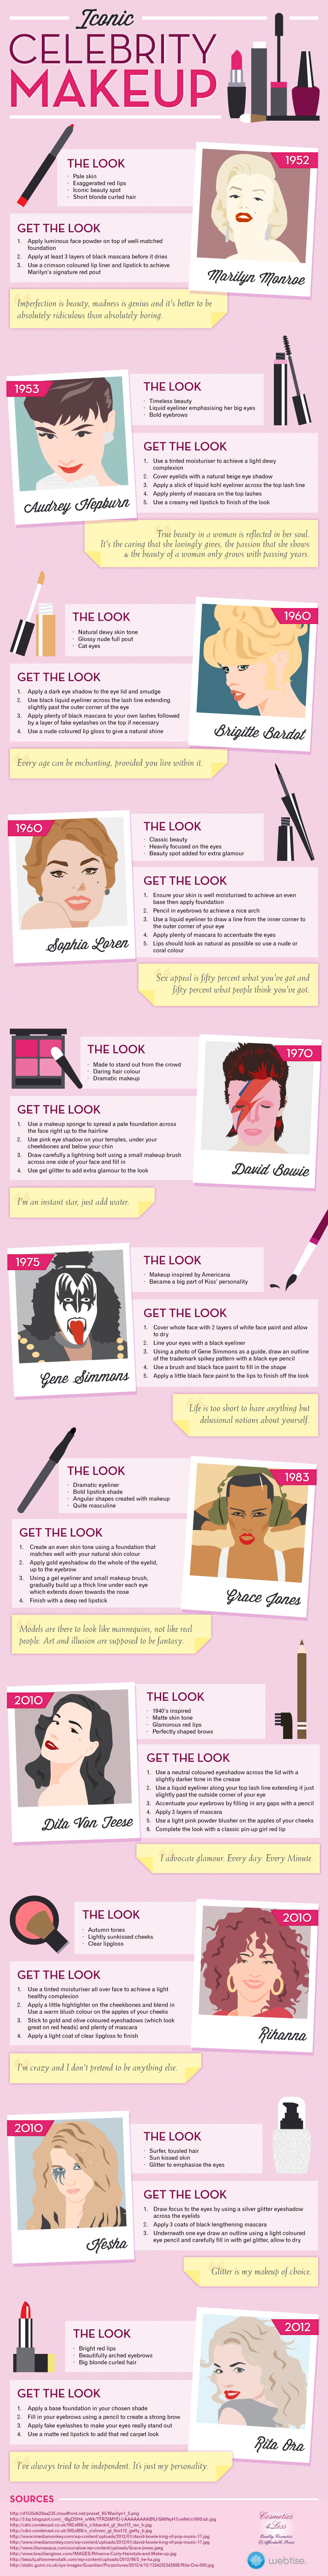 cosmetics4less-infographic